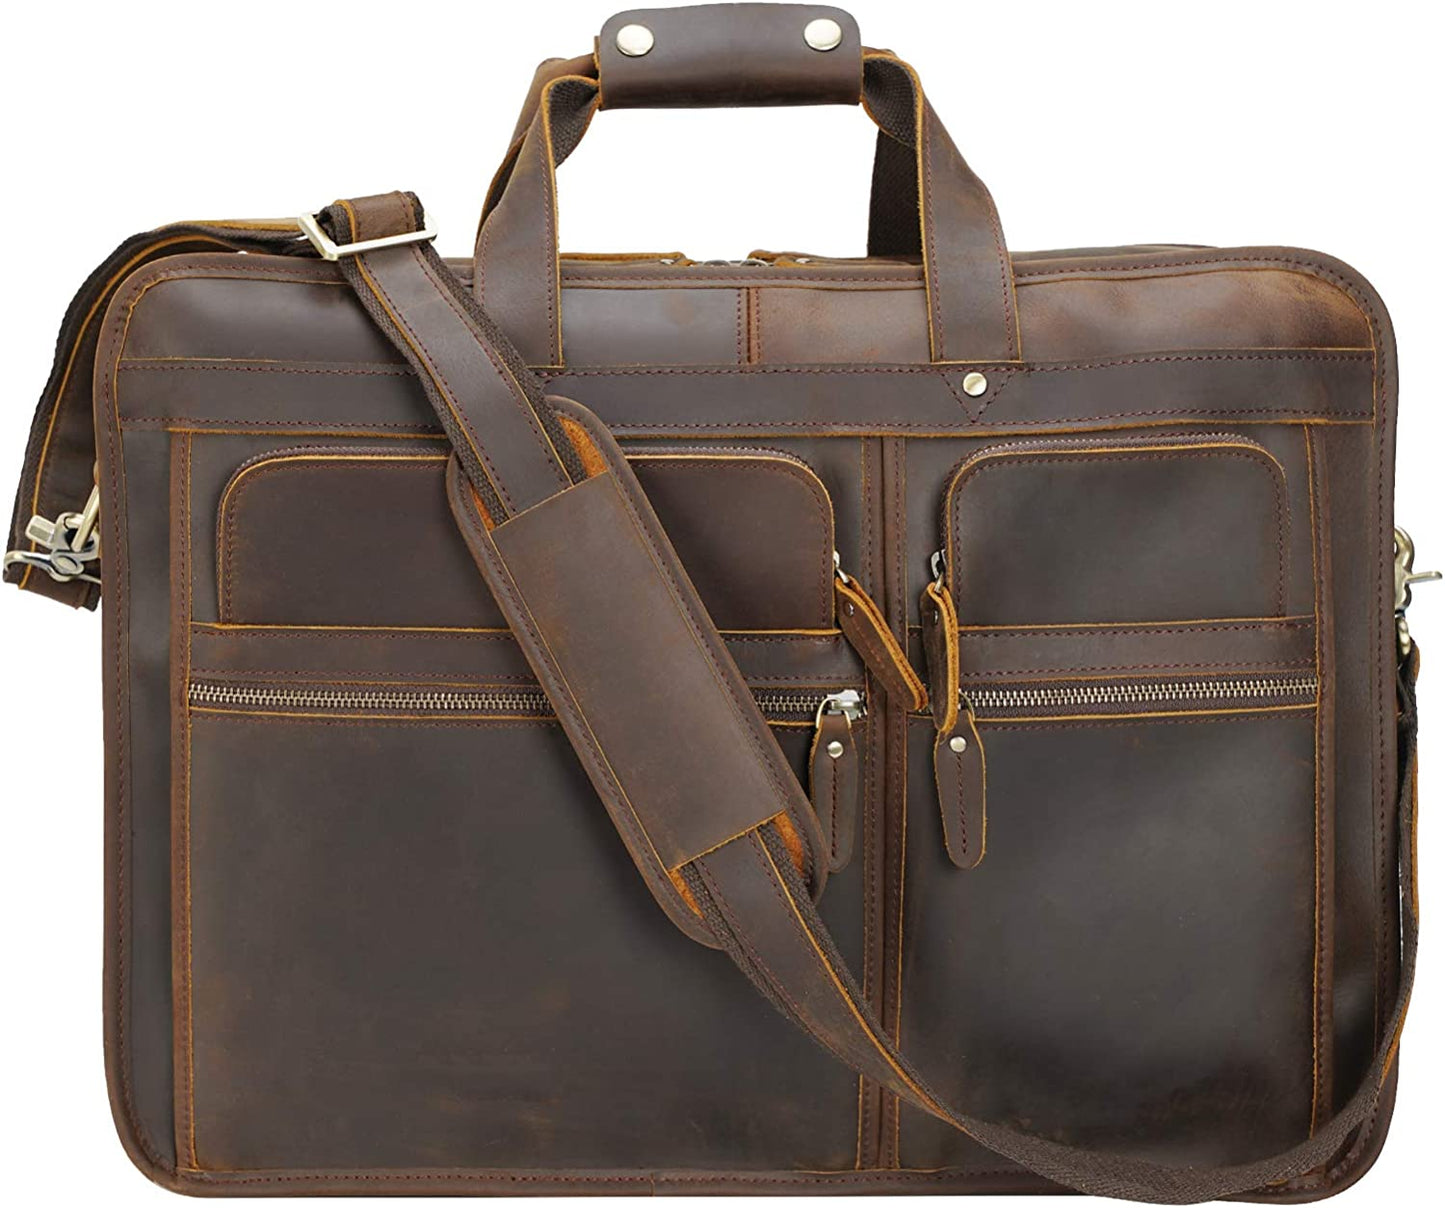 Polare 18.5” Full Grain Leather Laptop Briefcase Messenger Bag Tote For Men Large Fits 17.3” Laptop